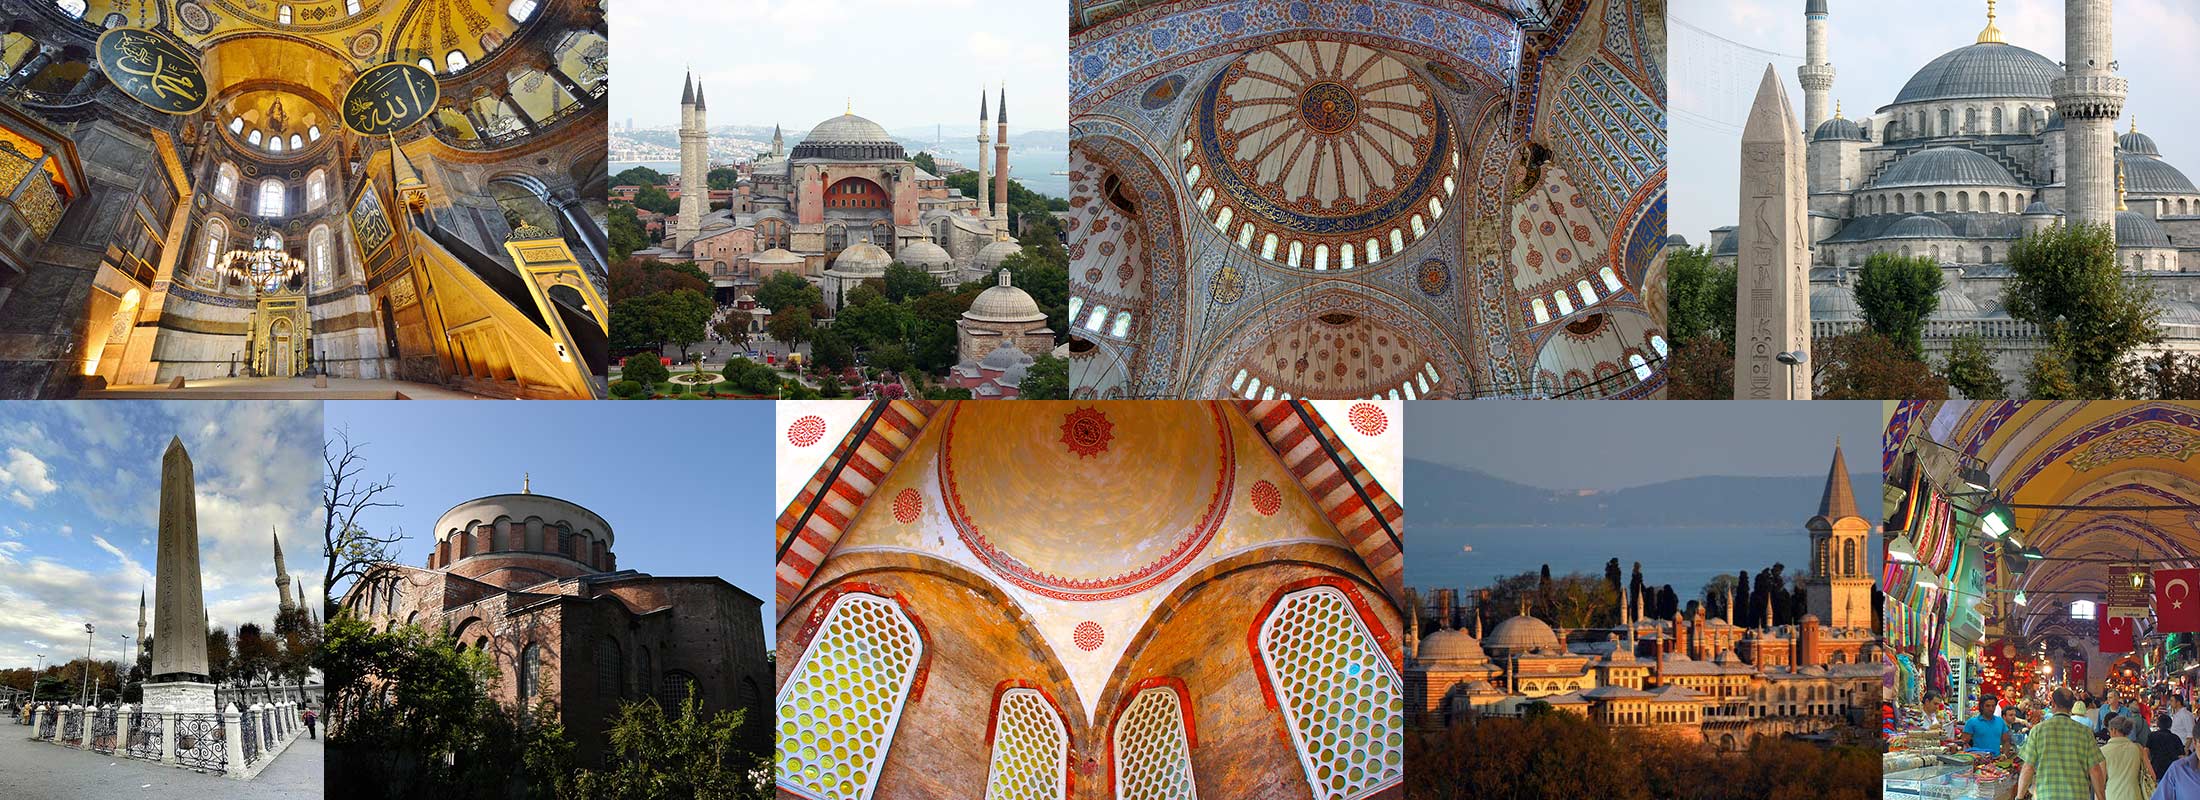 otomanas-y-bizantinas-classica-estambul-tour-santa-sofia-museo-azul-mezquita-topkapi-palacio